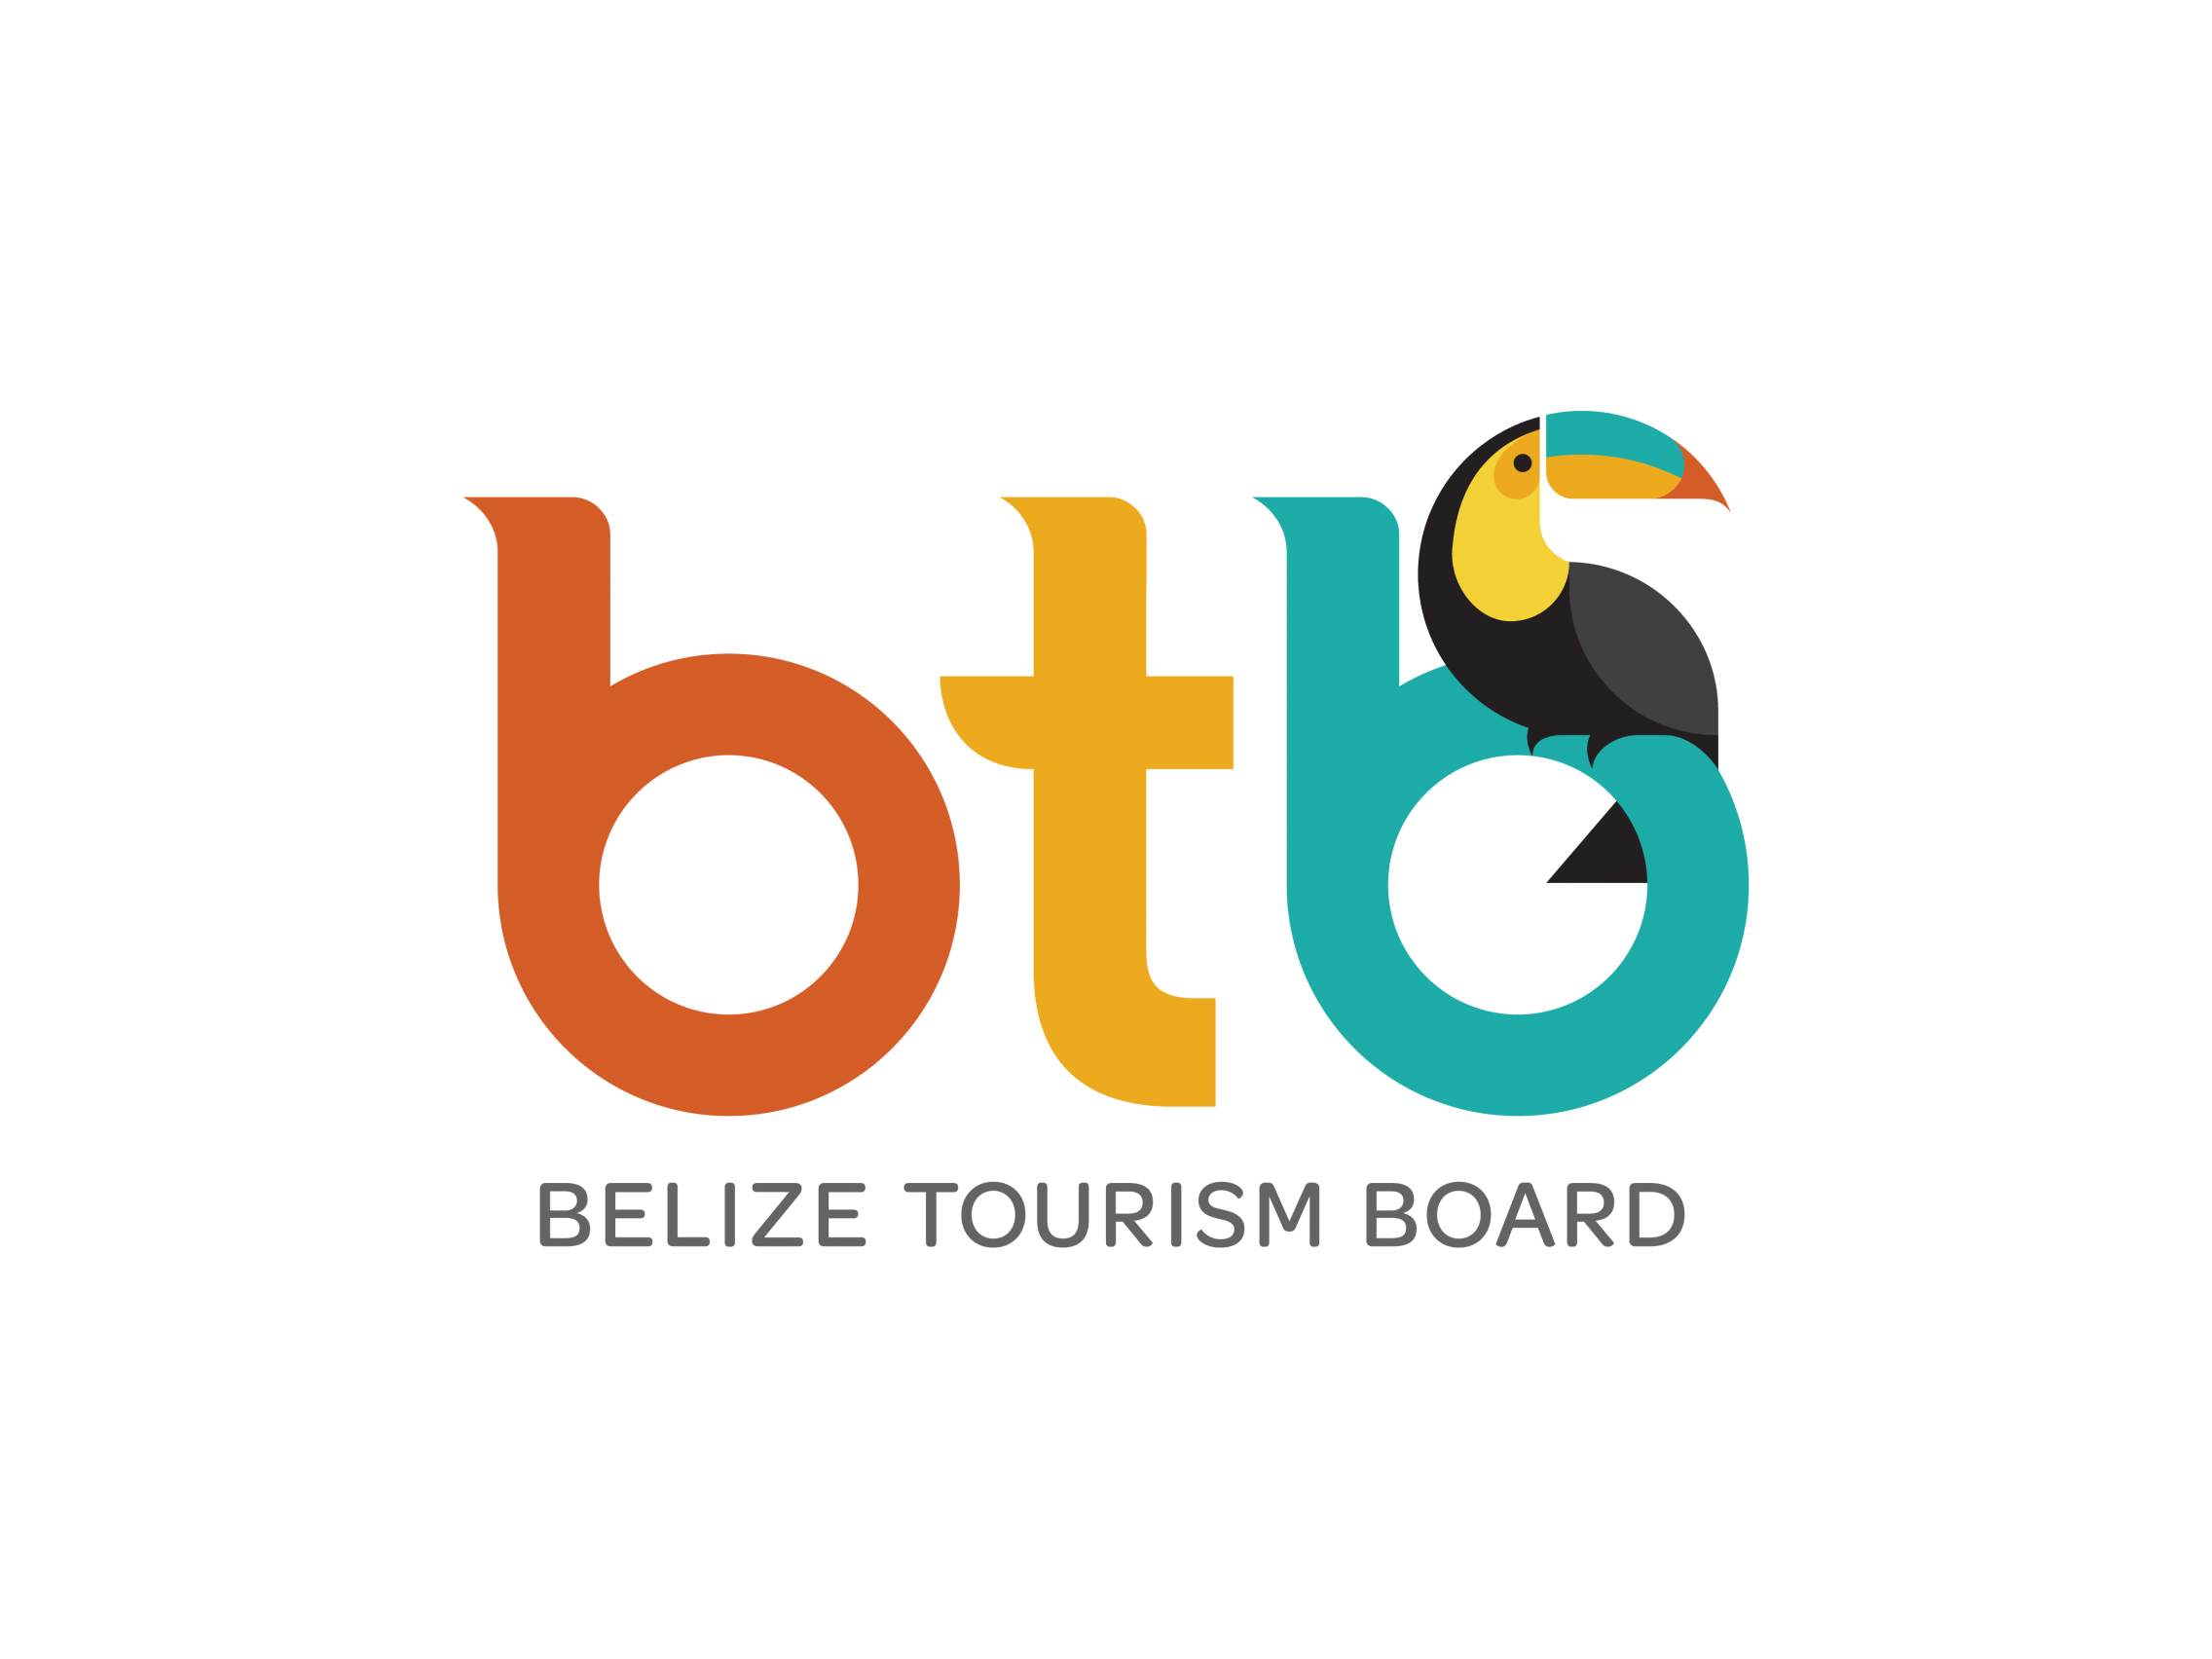 BTB Logo - btb logo